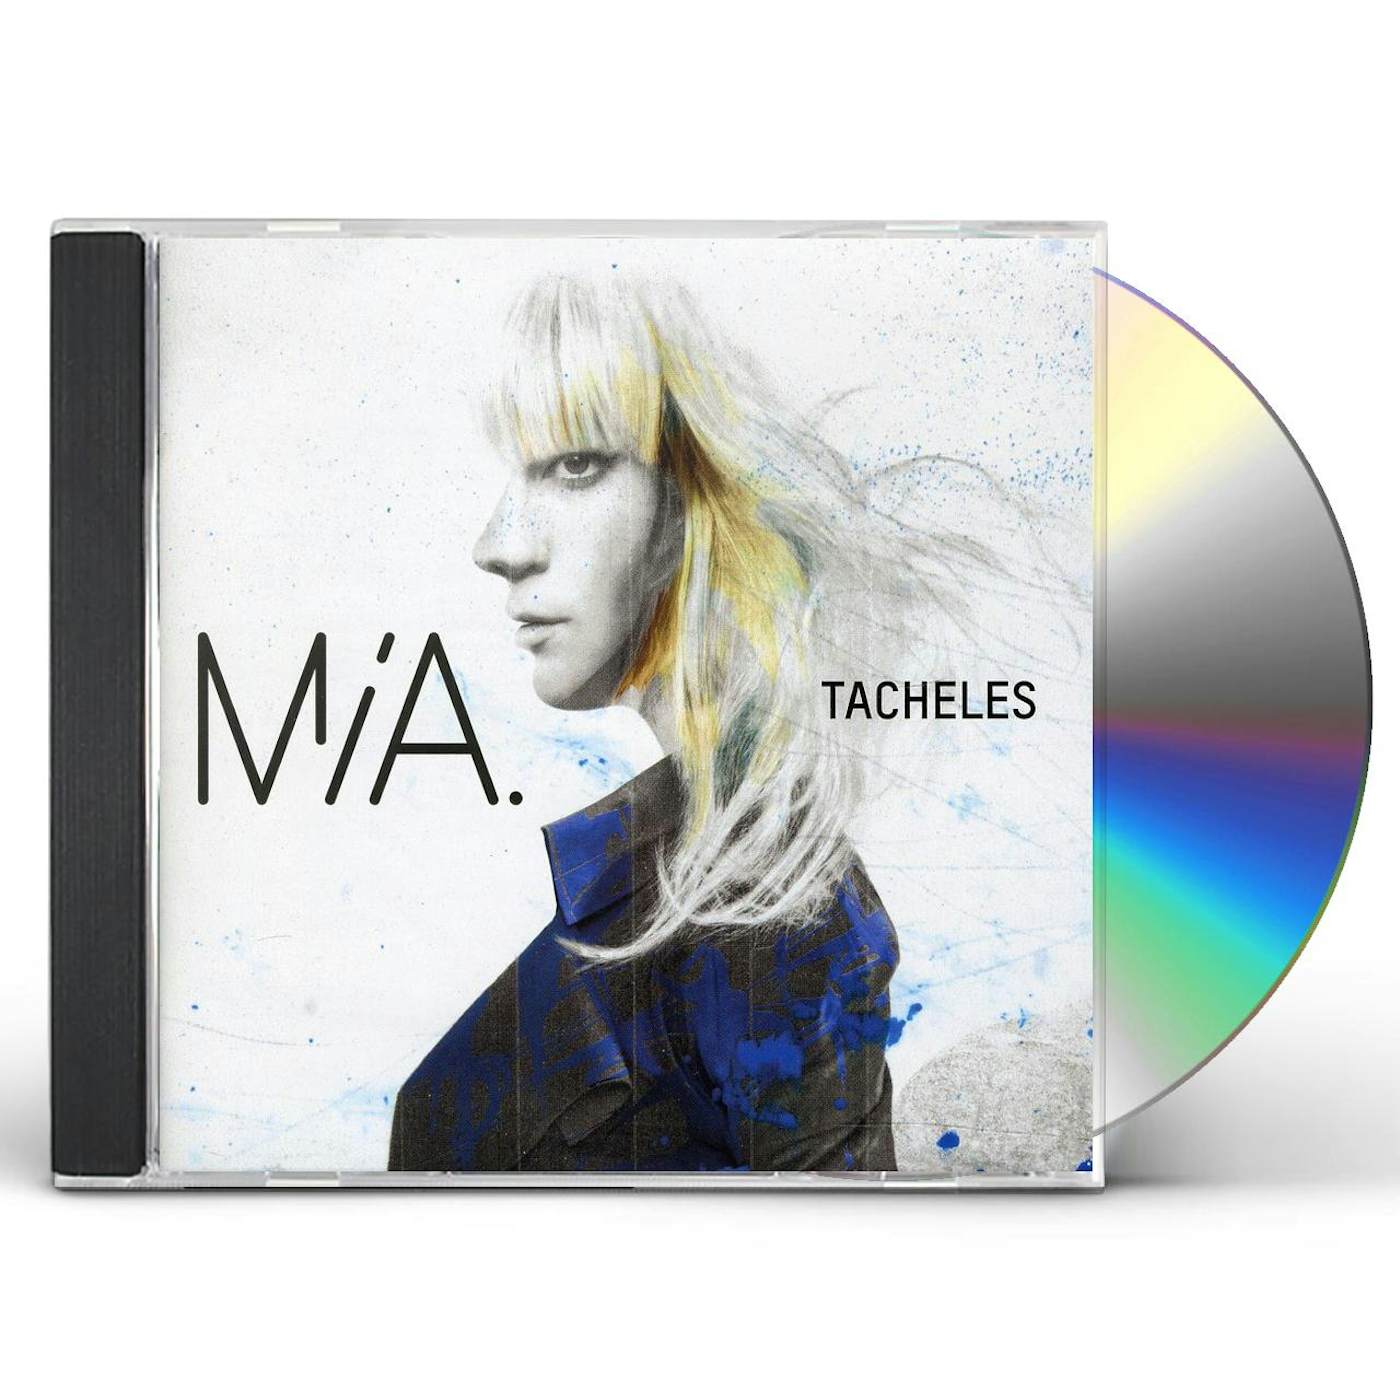 M.I.A. TACHELES CD